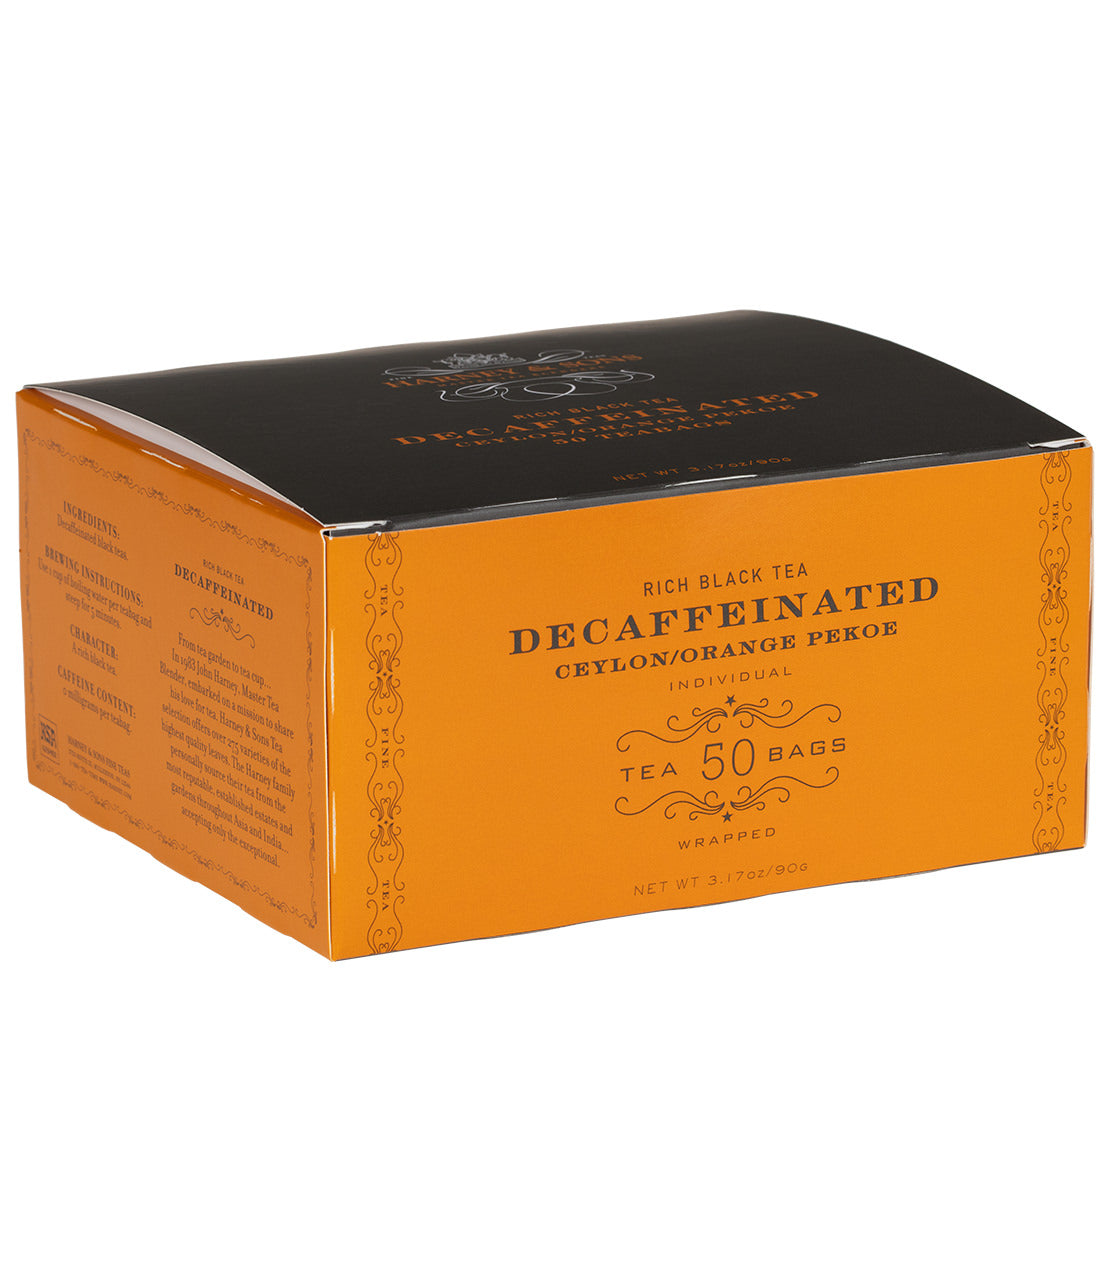 Decaf Ceylon (Decaf Orange Pekoe) - Teabags 50 CT Foil Wrapped Teabags - Harney & Sons Fine Teas